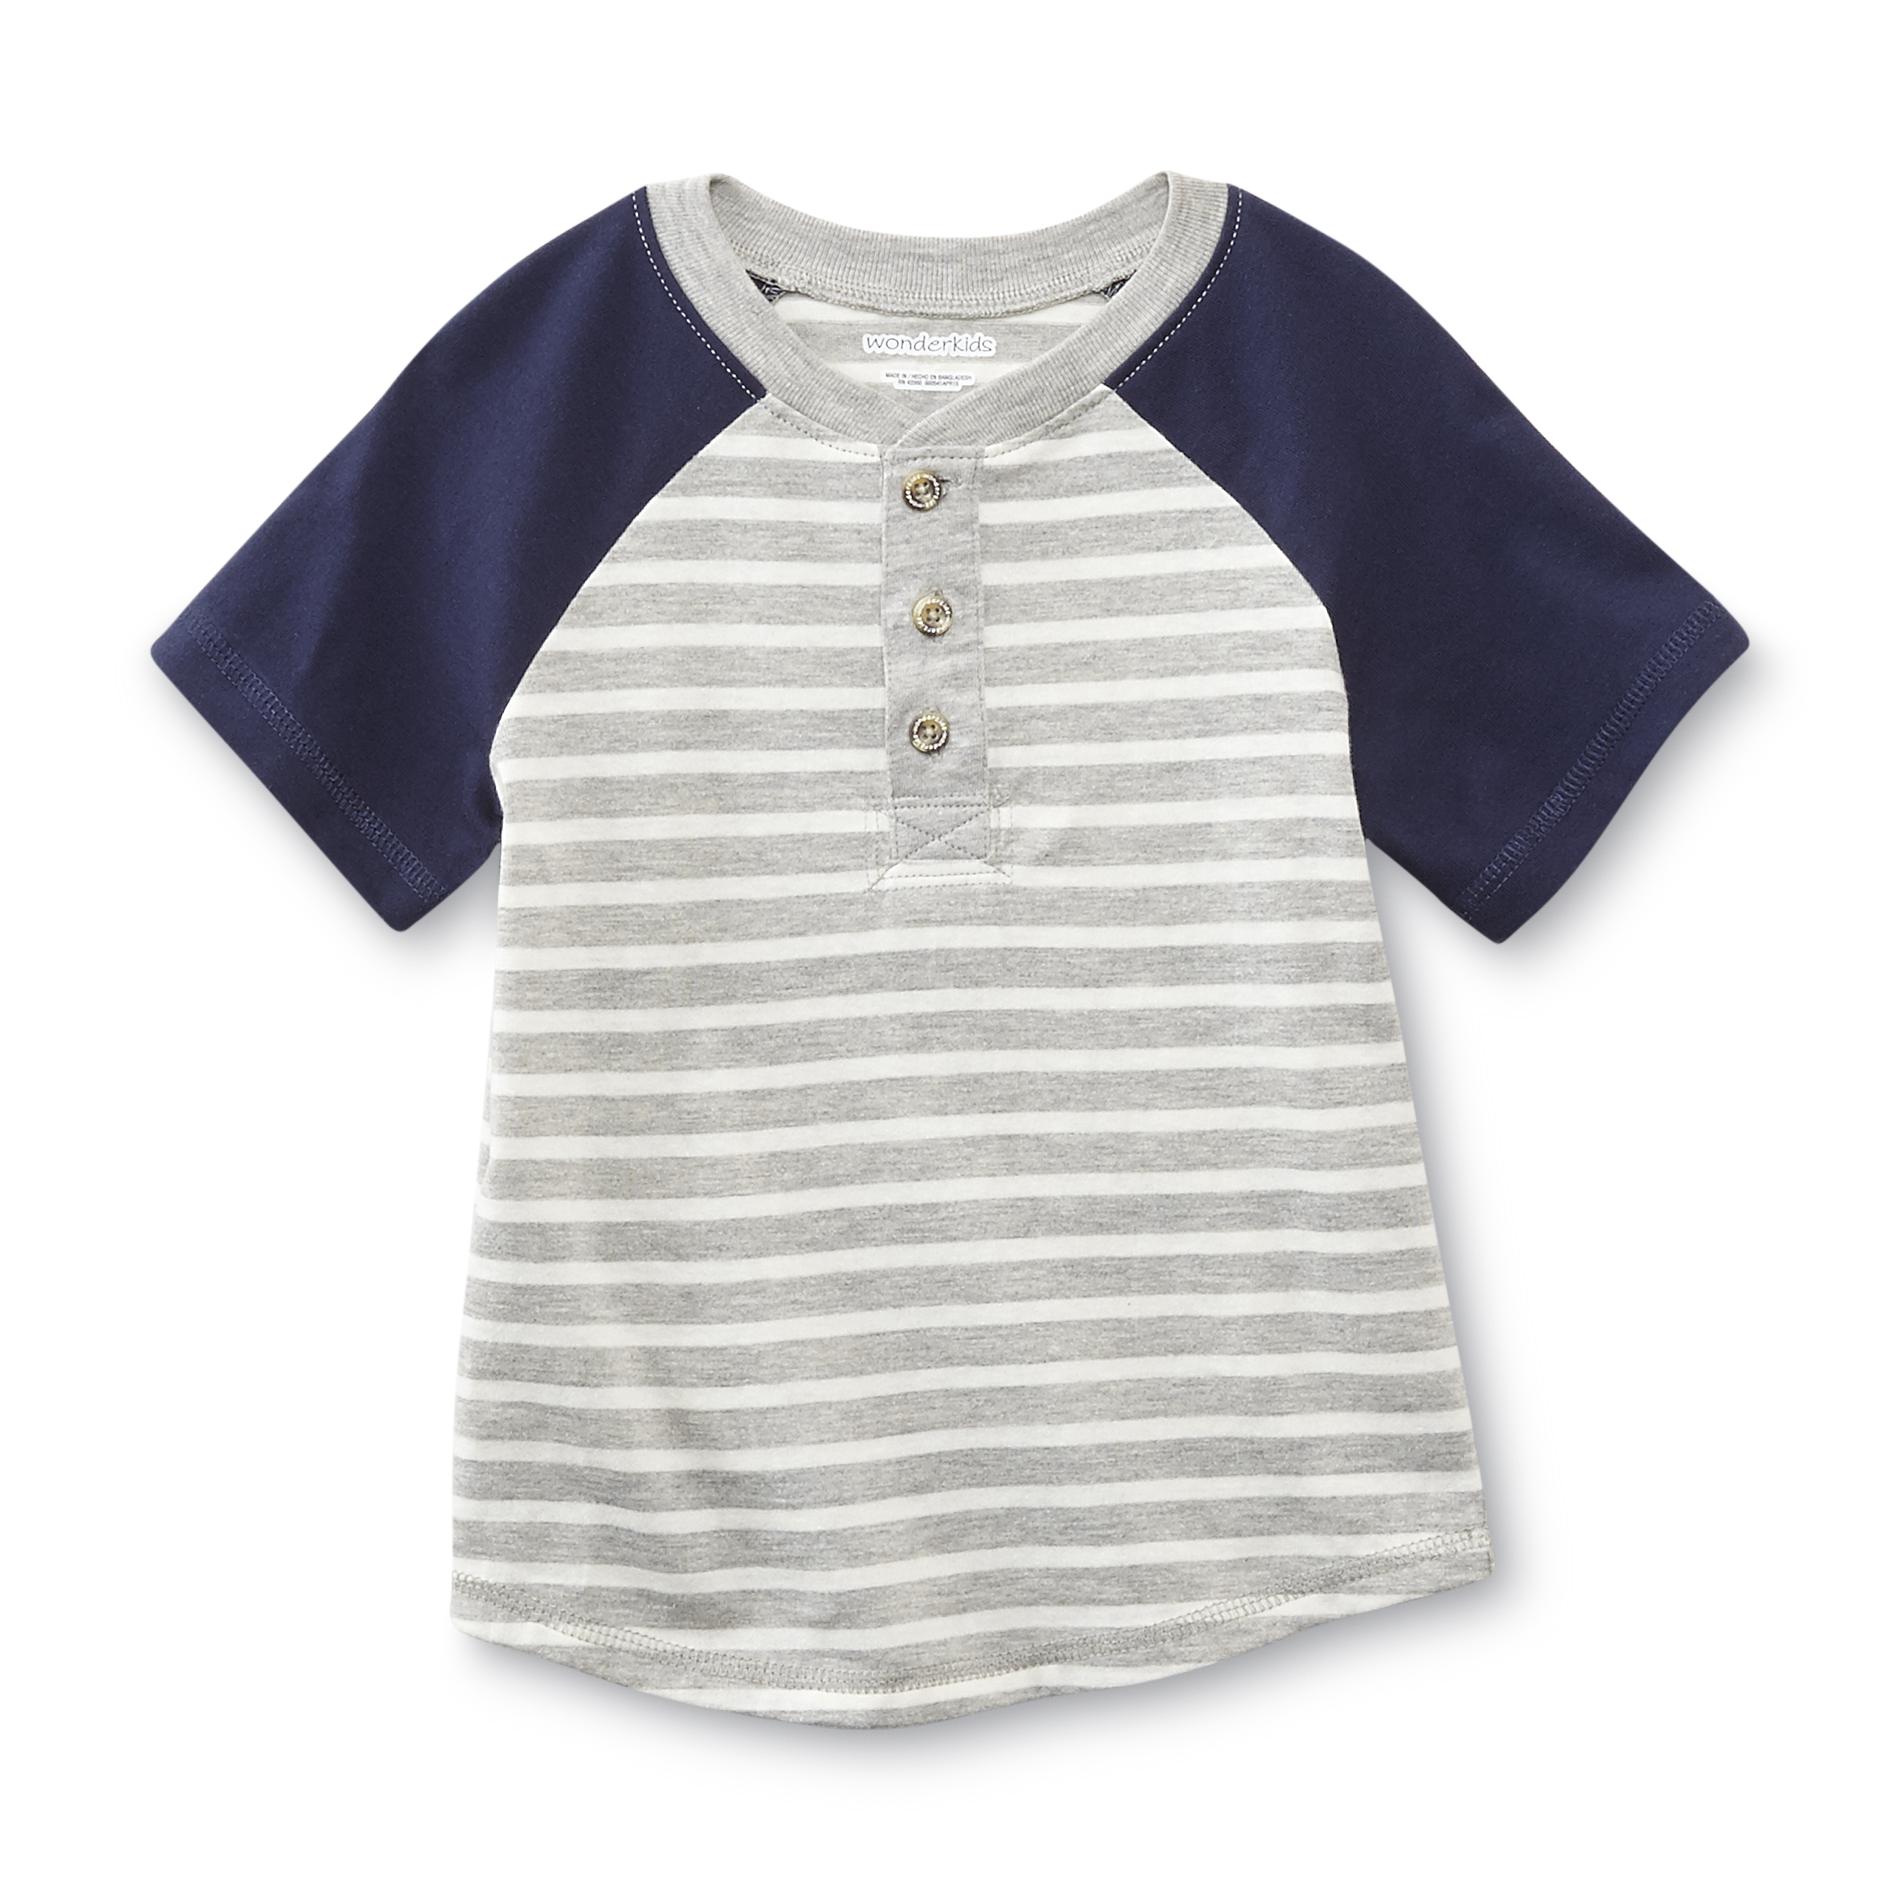 Infant & Toddler Boy's Short-Sleeve Henley Shirt - Striped